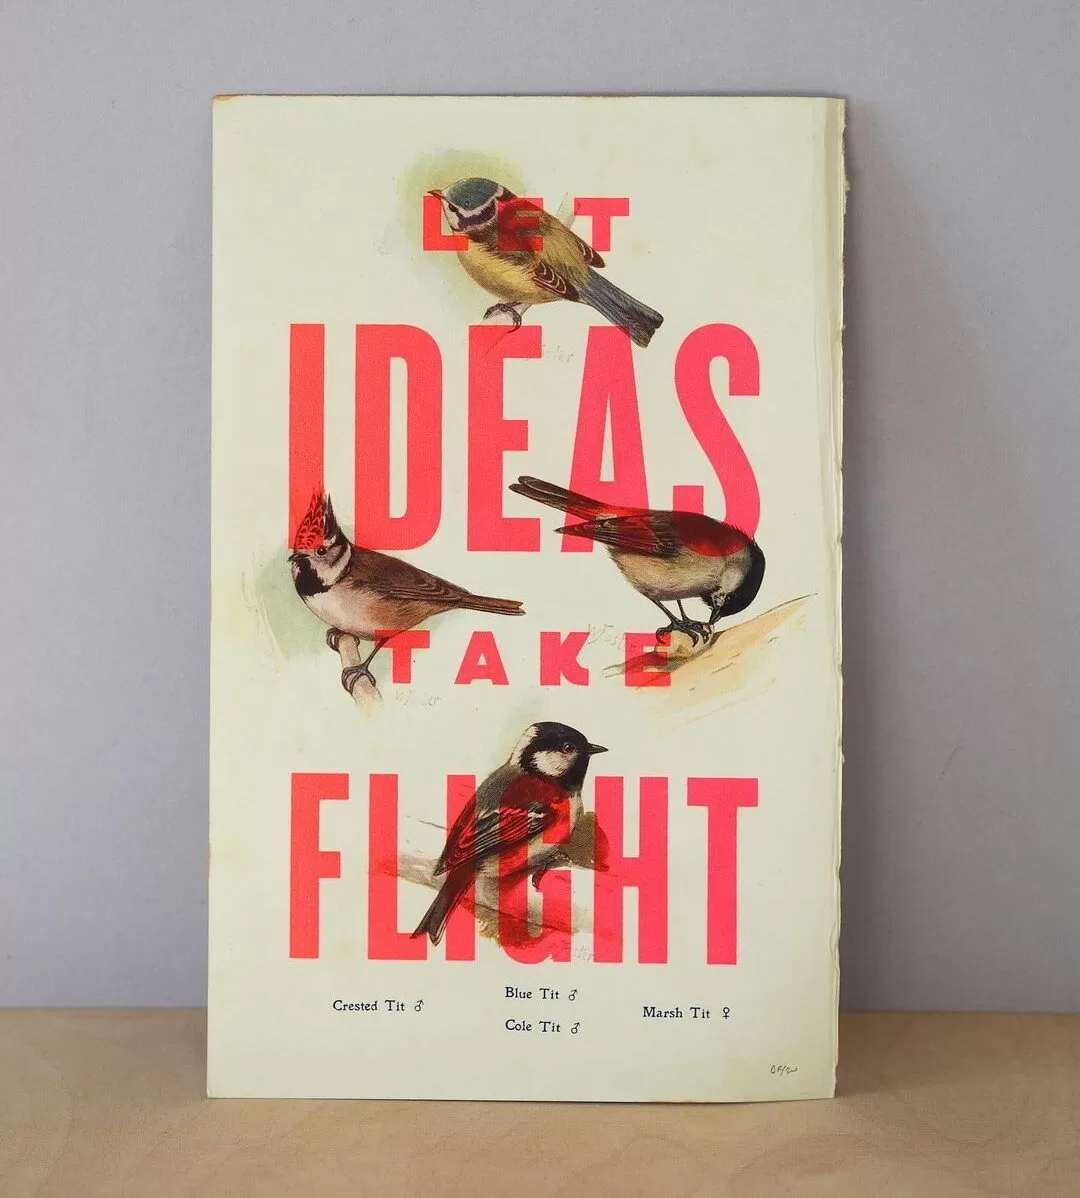 'Let ideas take flight' print by Basil & Ford